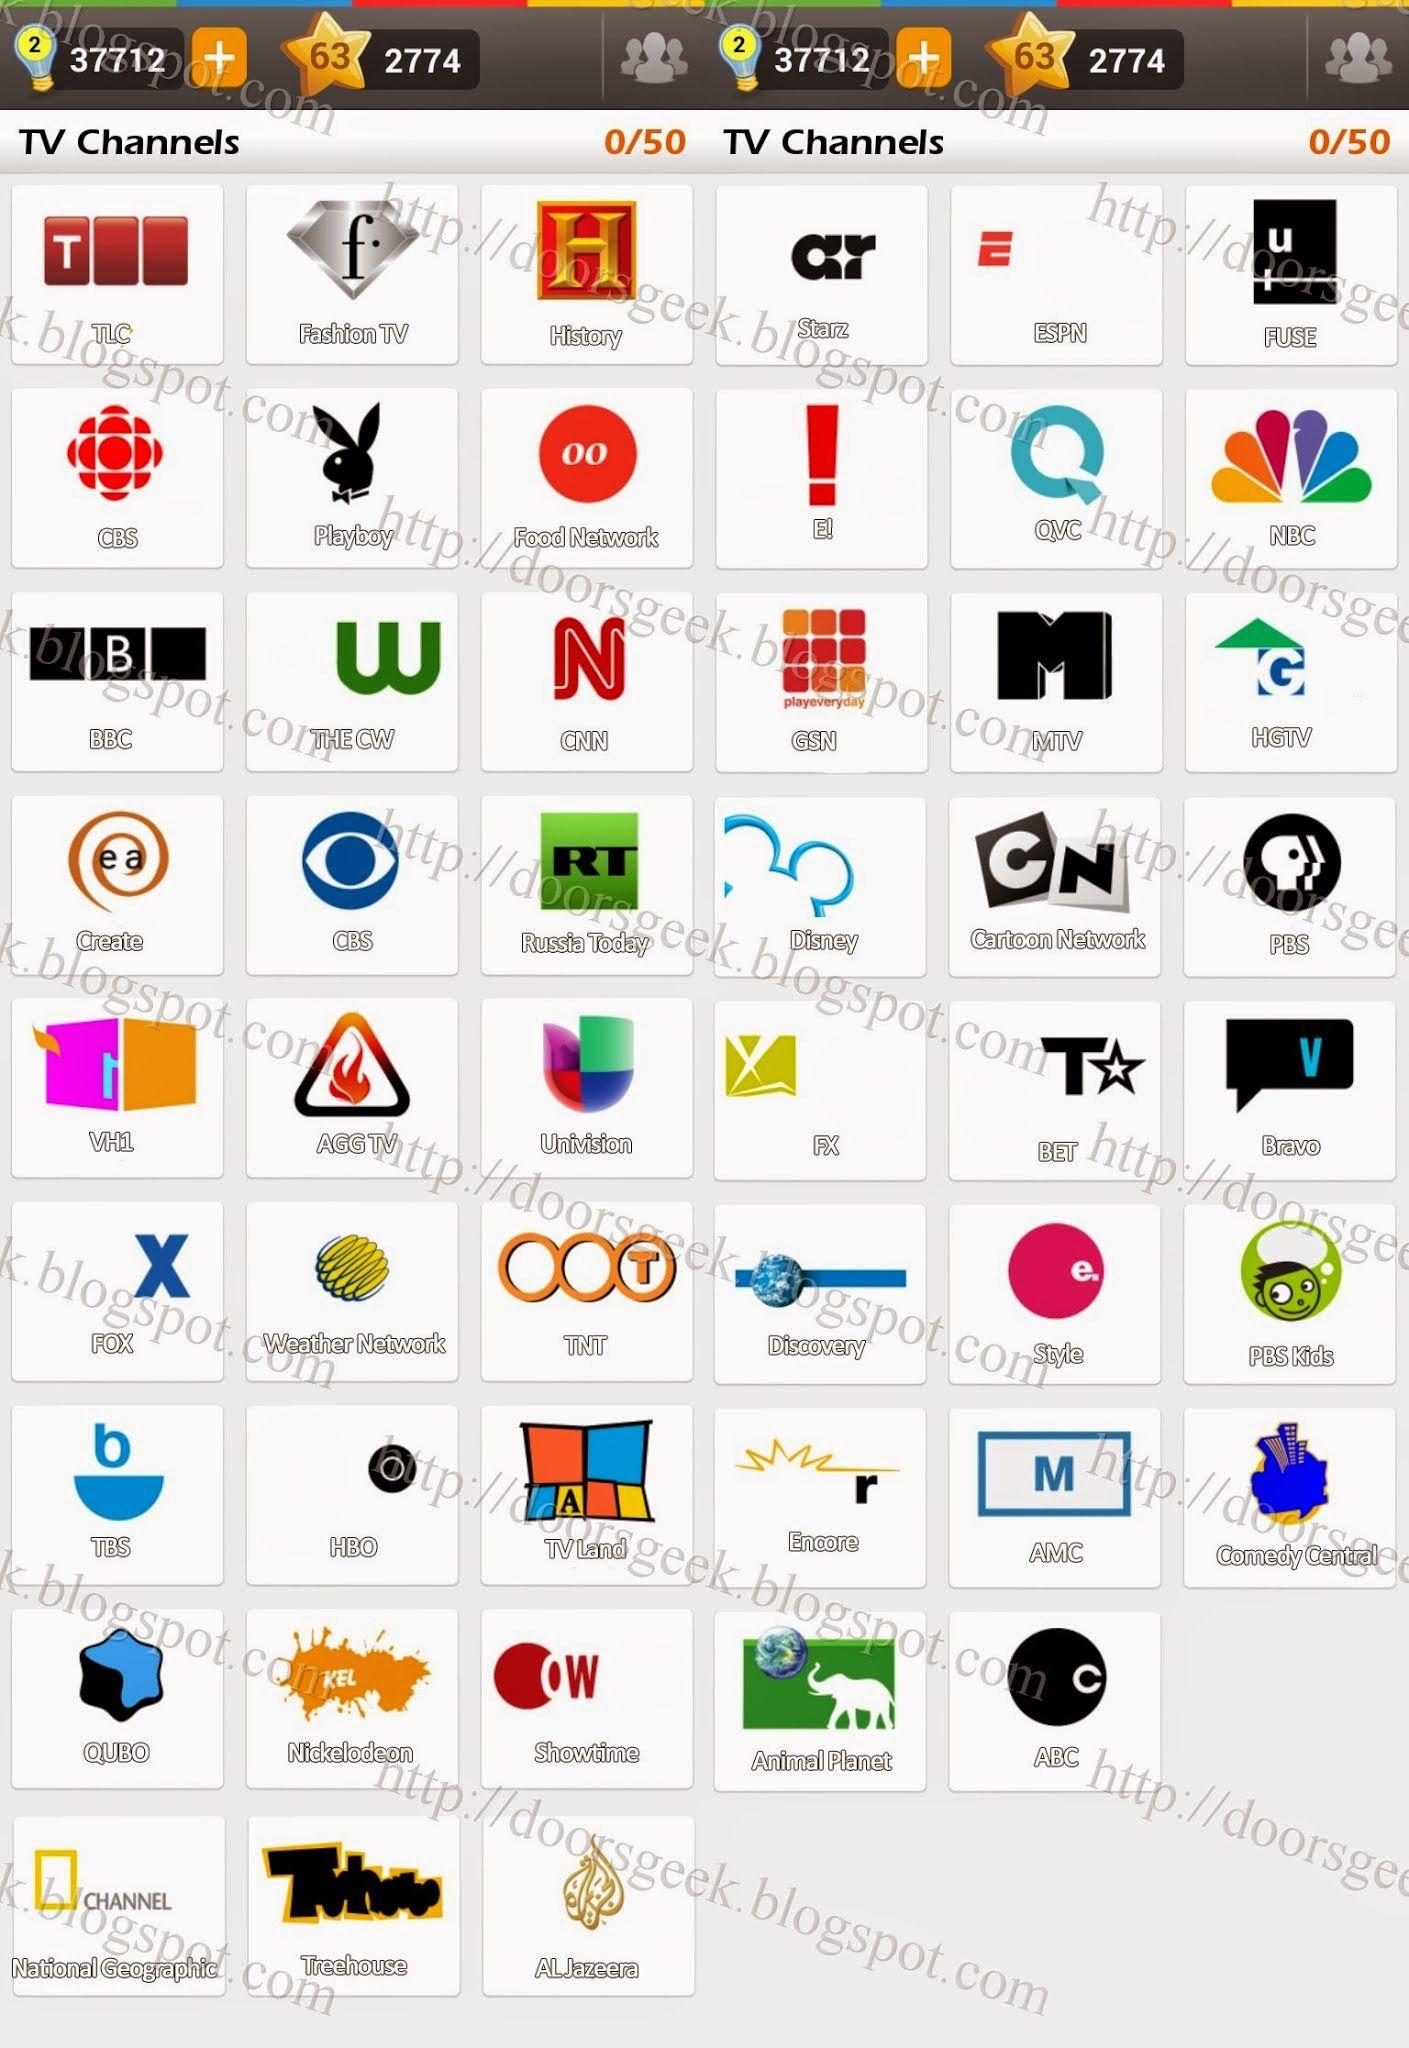 TV Channel Logo - Logo Game: Guess the Brand [Bonus] TV Channels ~ Doors Geek